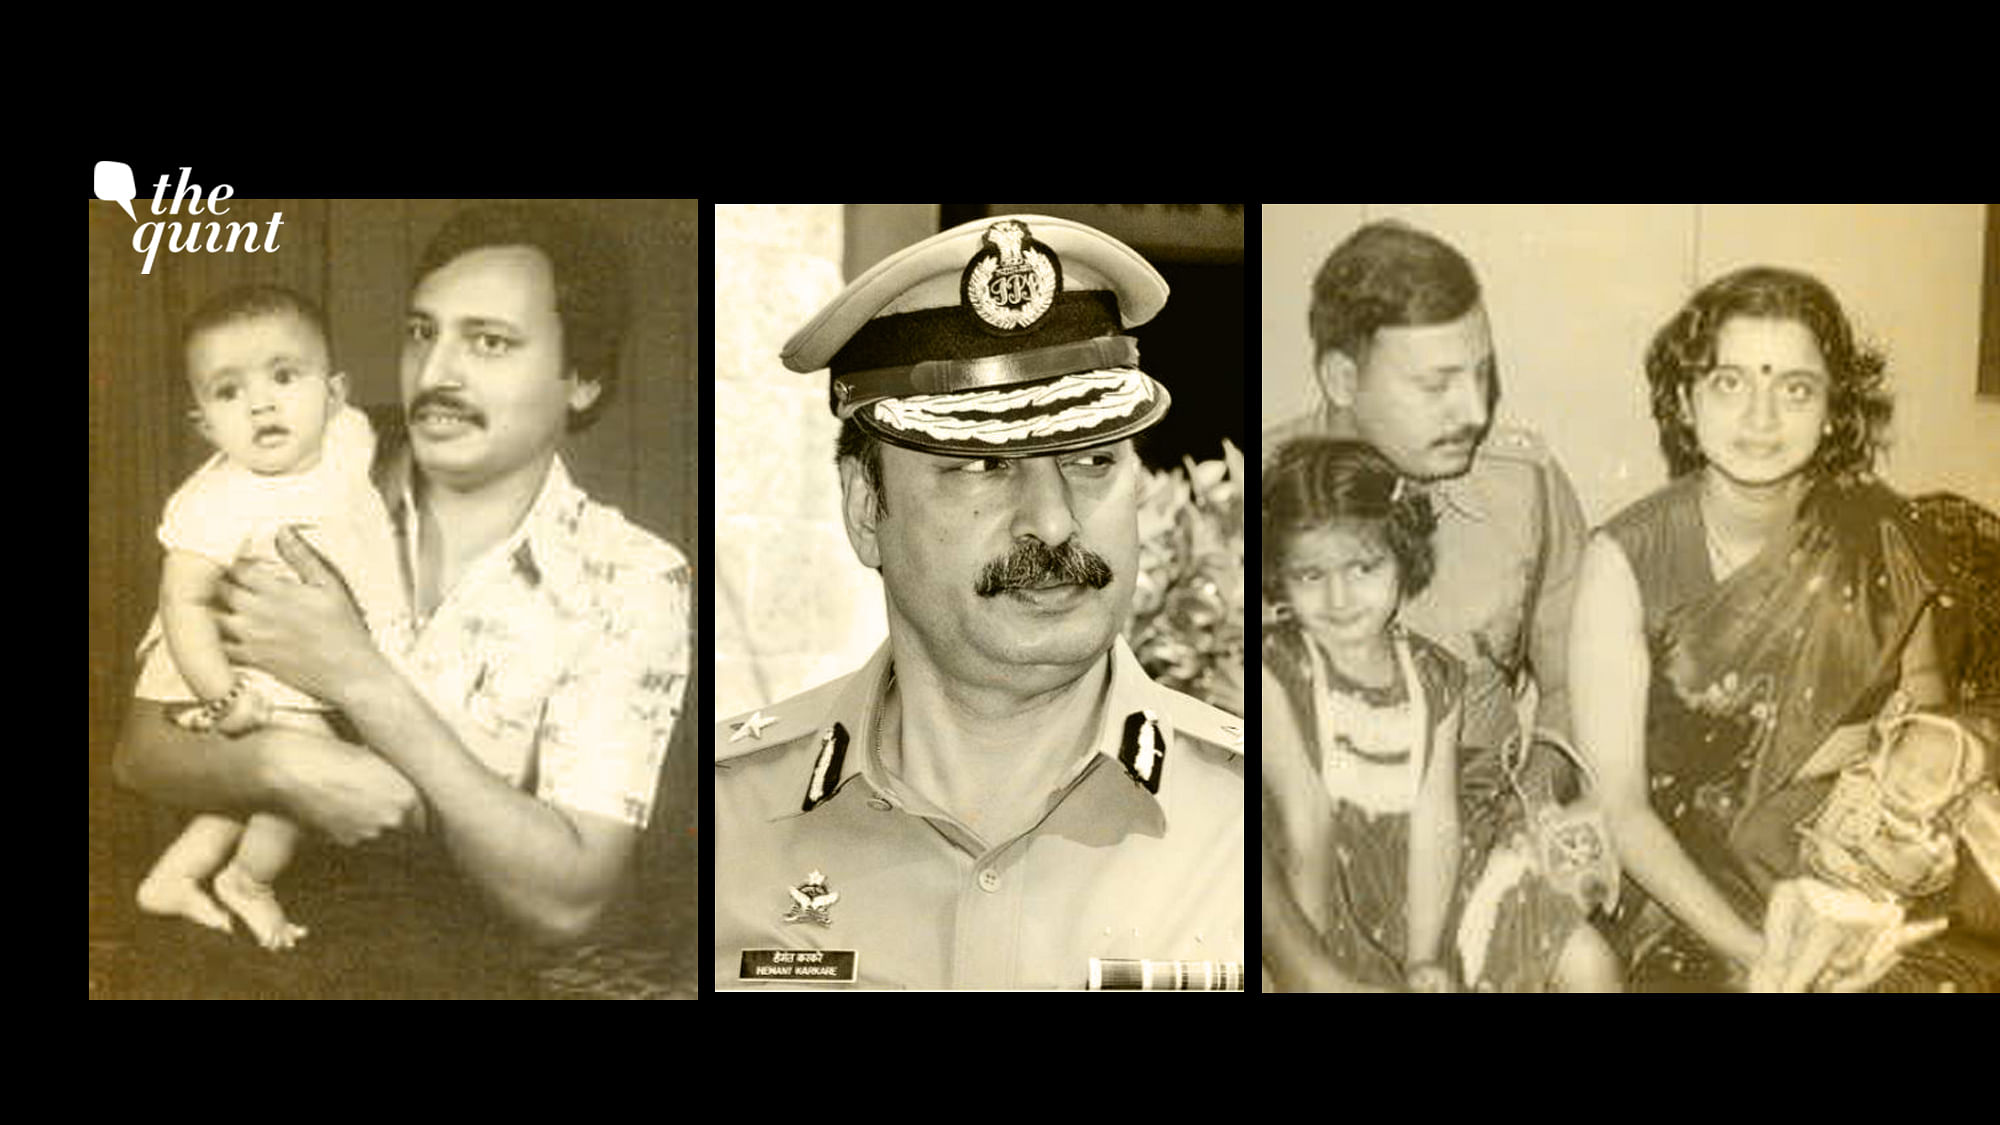 Snapshots from 26/11 martyr Hemant Karkare’s life.